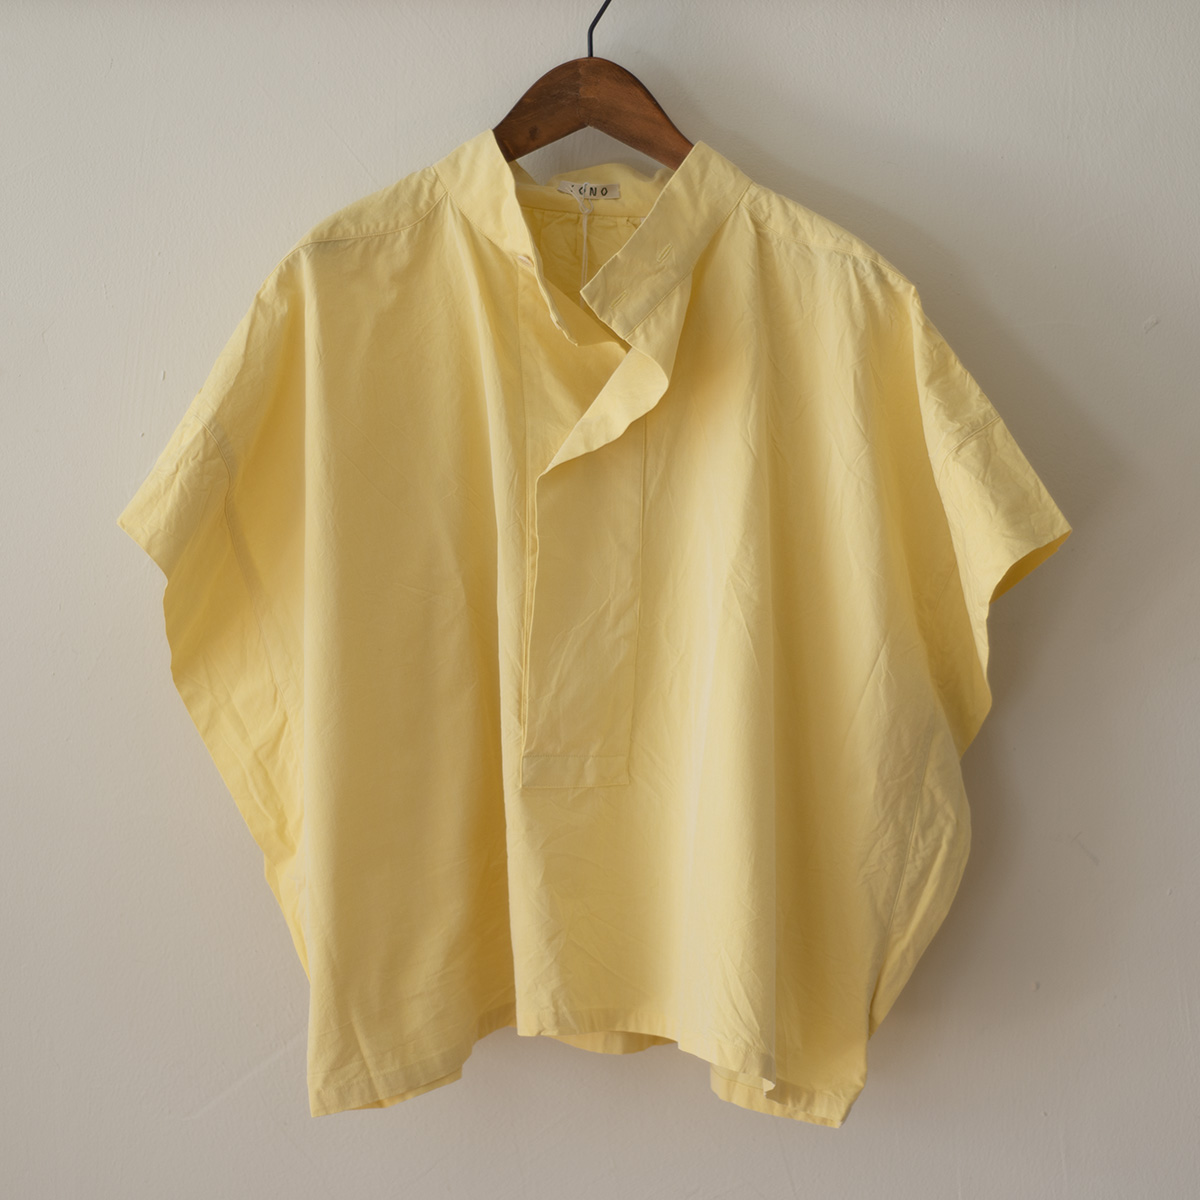 Sono Louse Shirt yellow